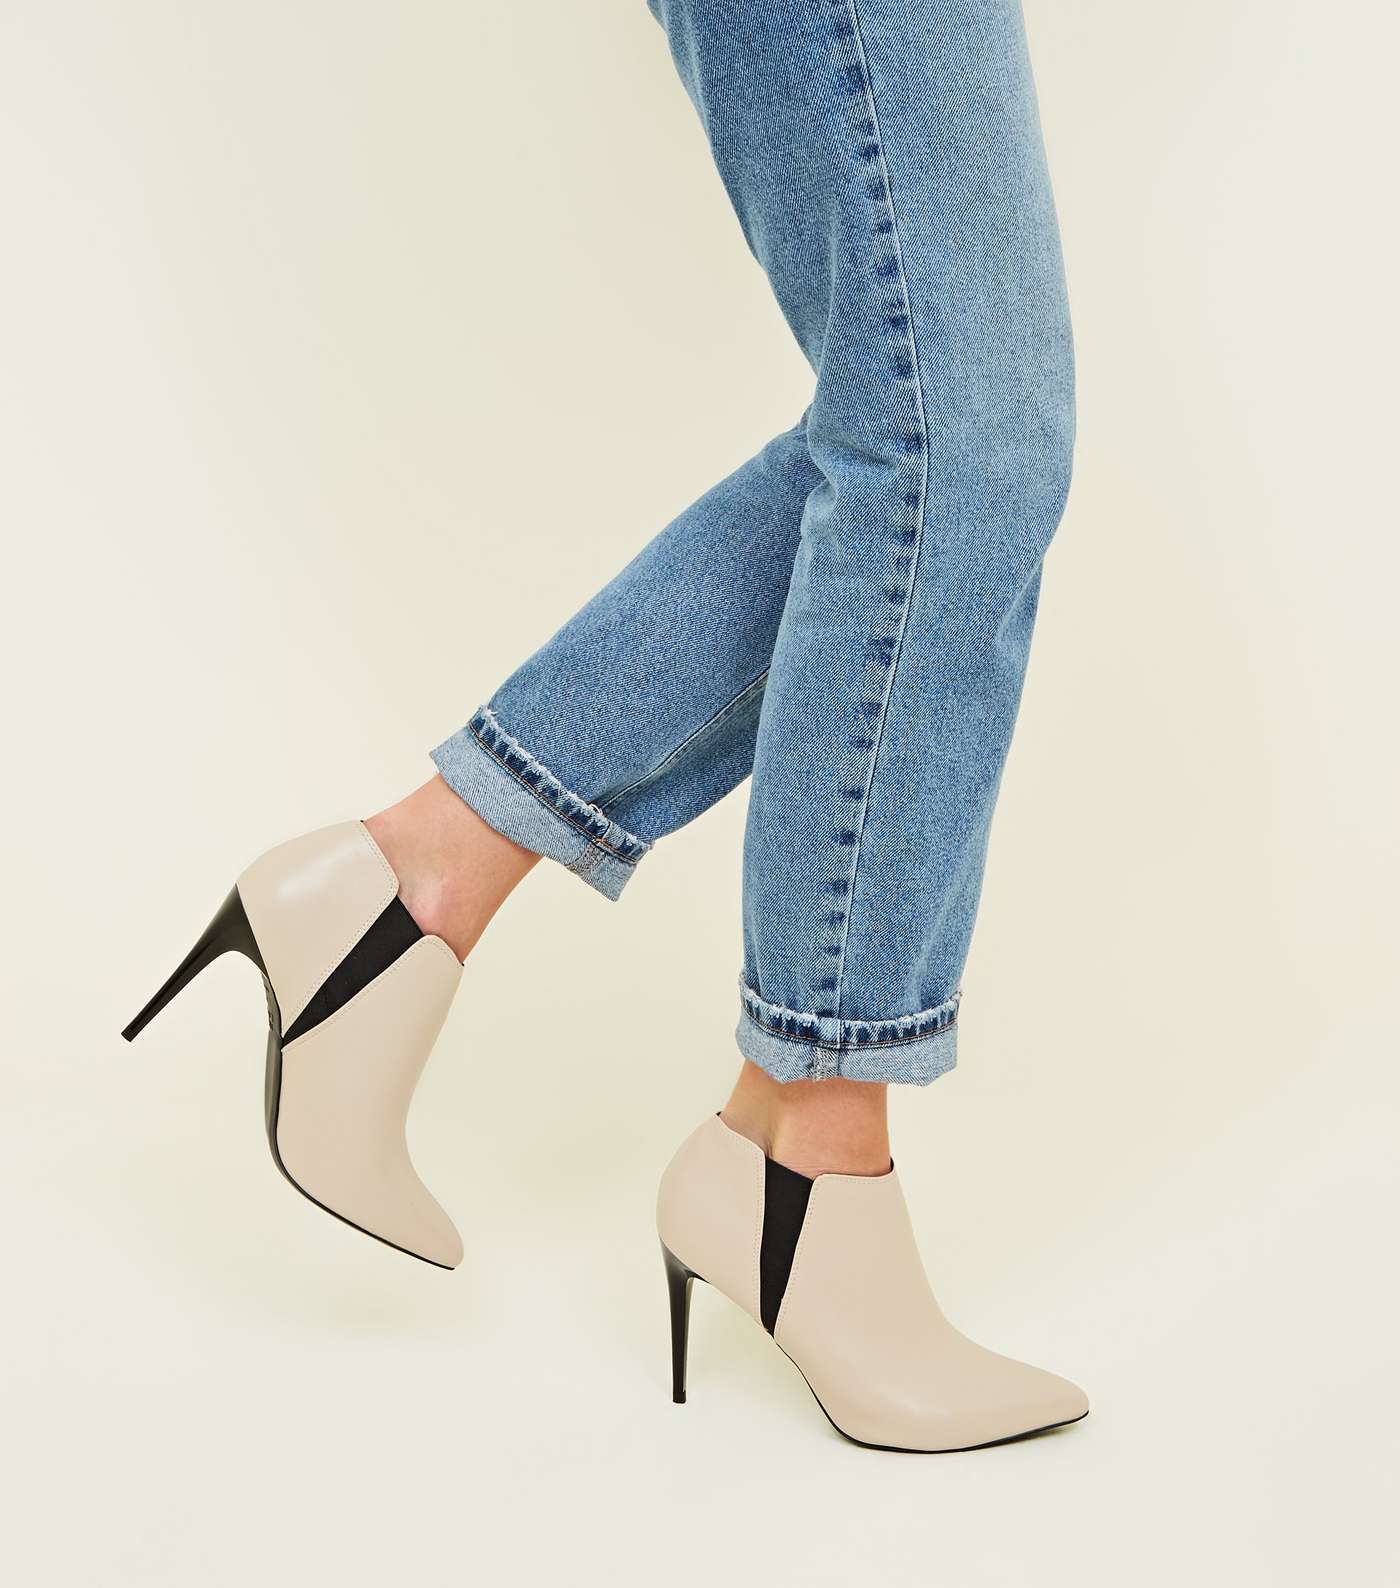 Off White Stiletto Heel Chelsea Shoe Boots Image 2